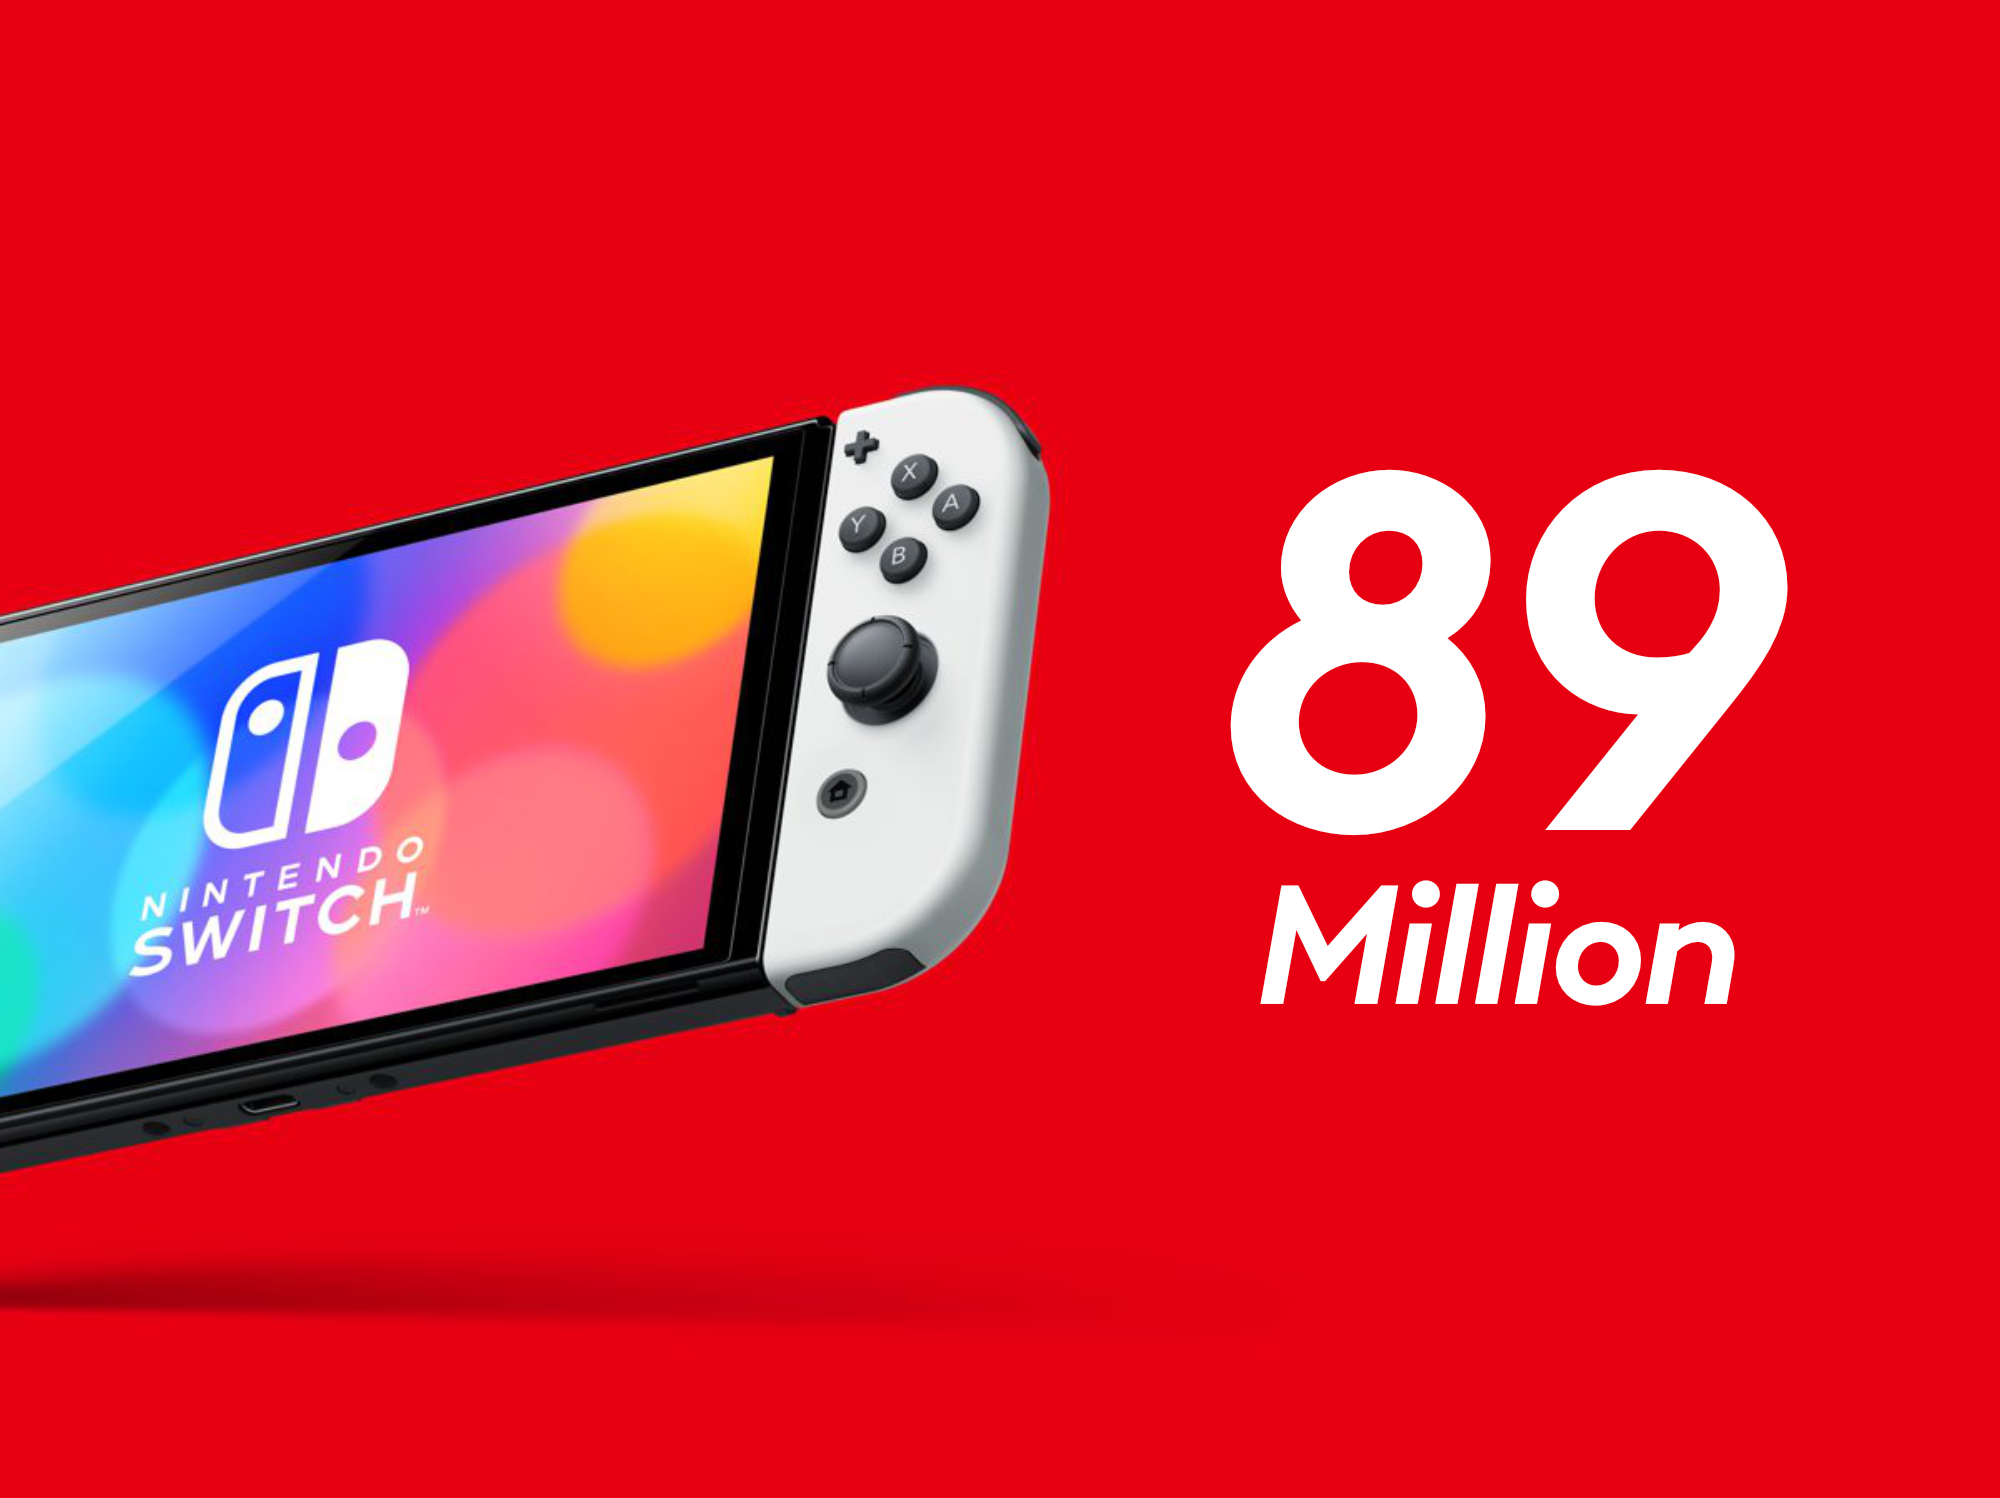 Gaming Platform Wars | Nintendo sells 89 million Switch consoles so far